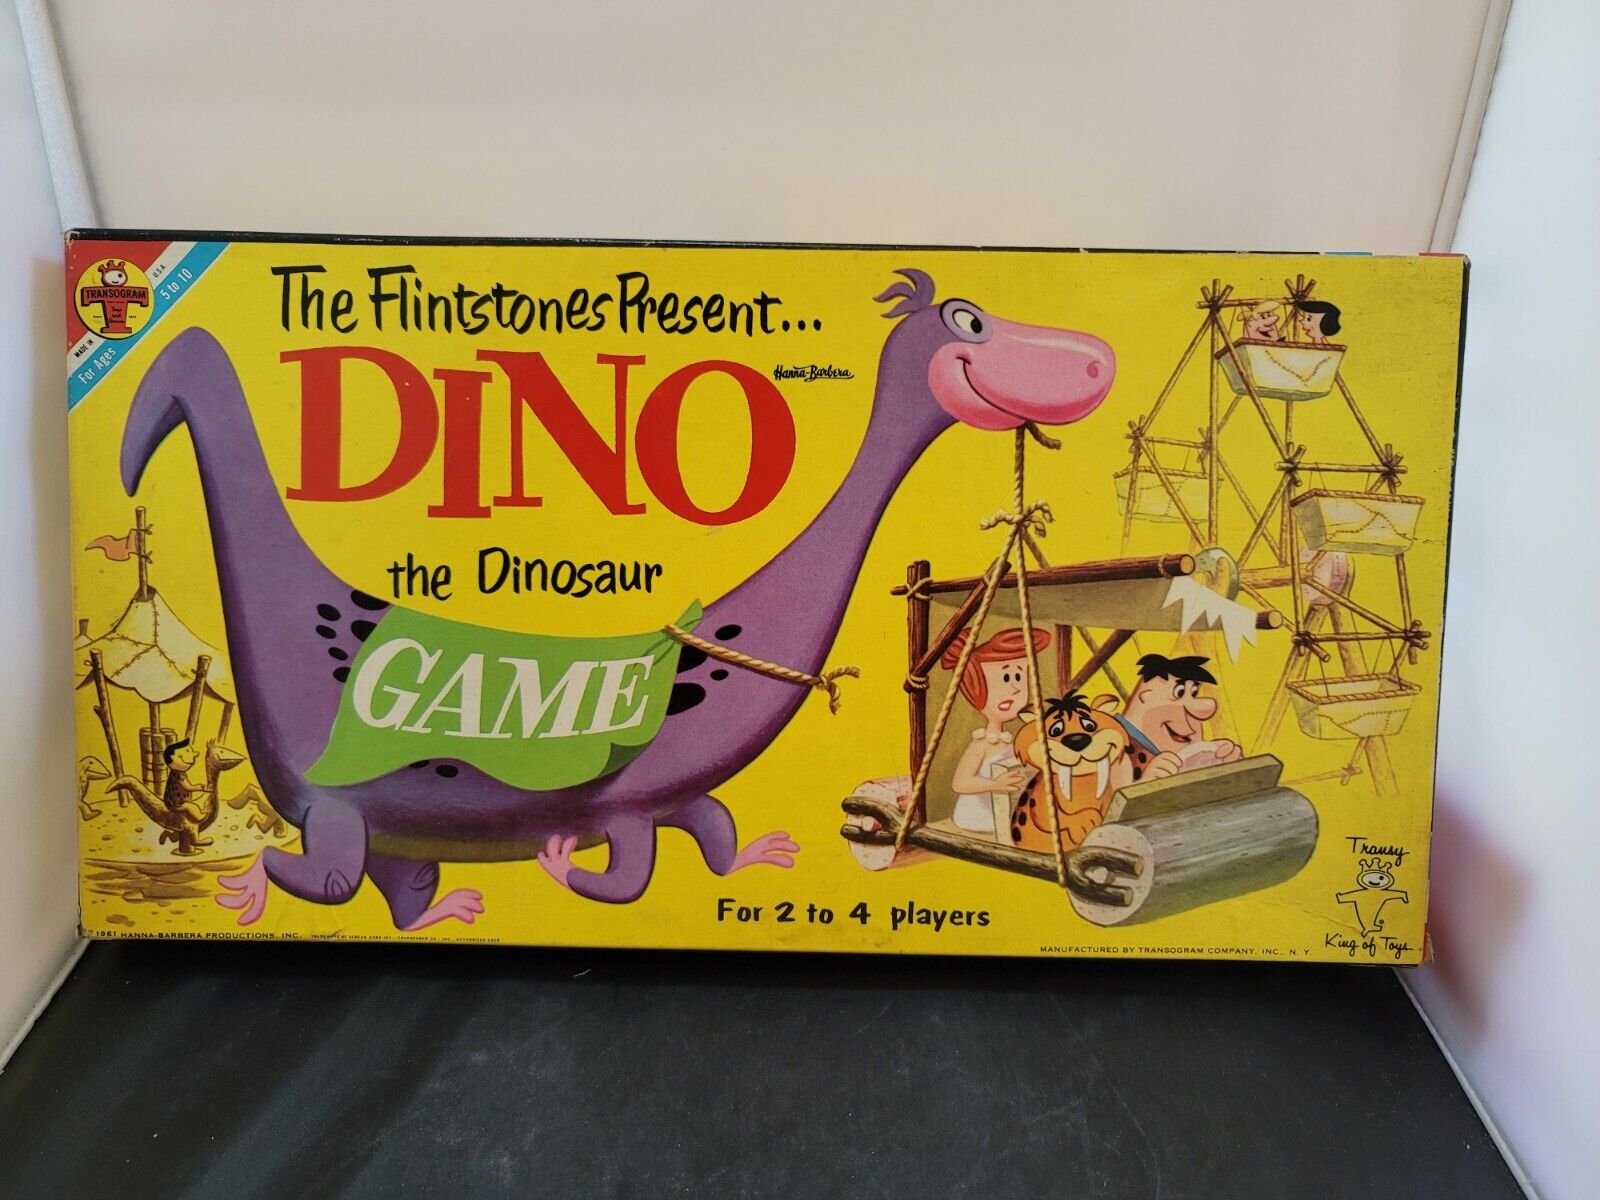 Vintage 1961 Dino the Dinosaur Board Game Complete - The Flintstones Transogram